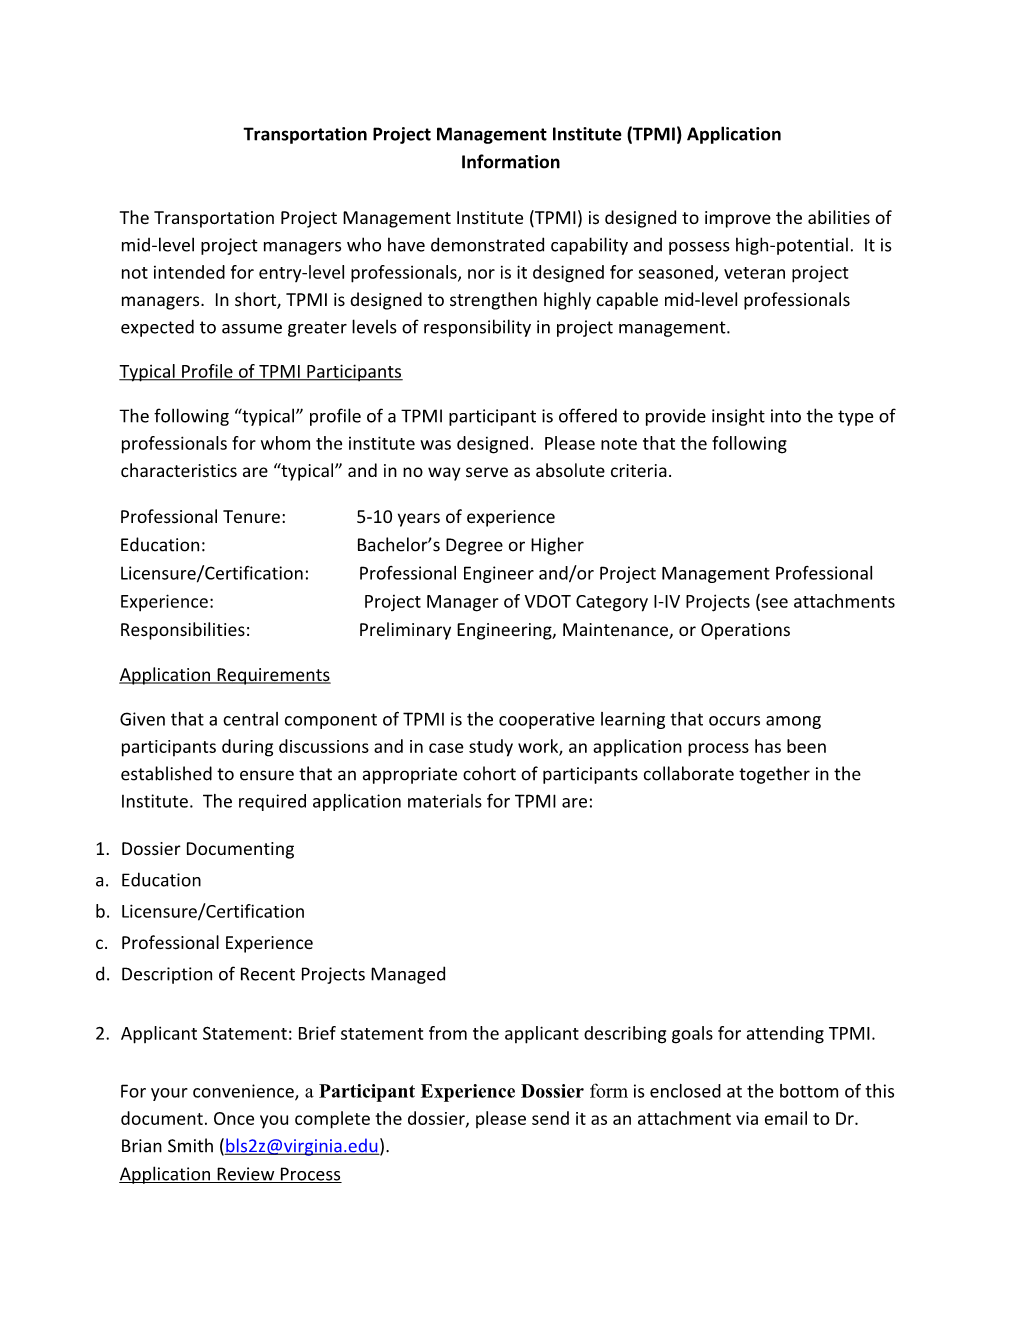 Transportation Project Management Institute (TPMI) Application Information